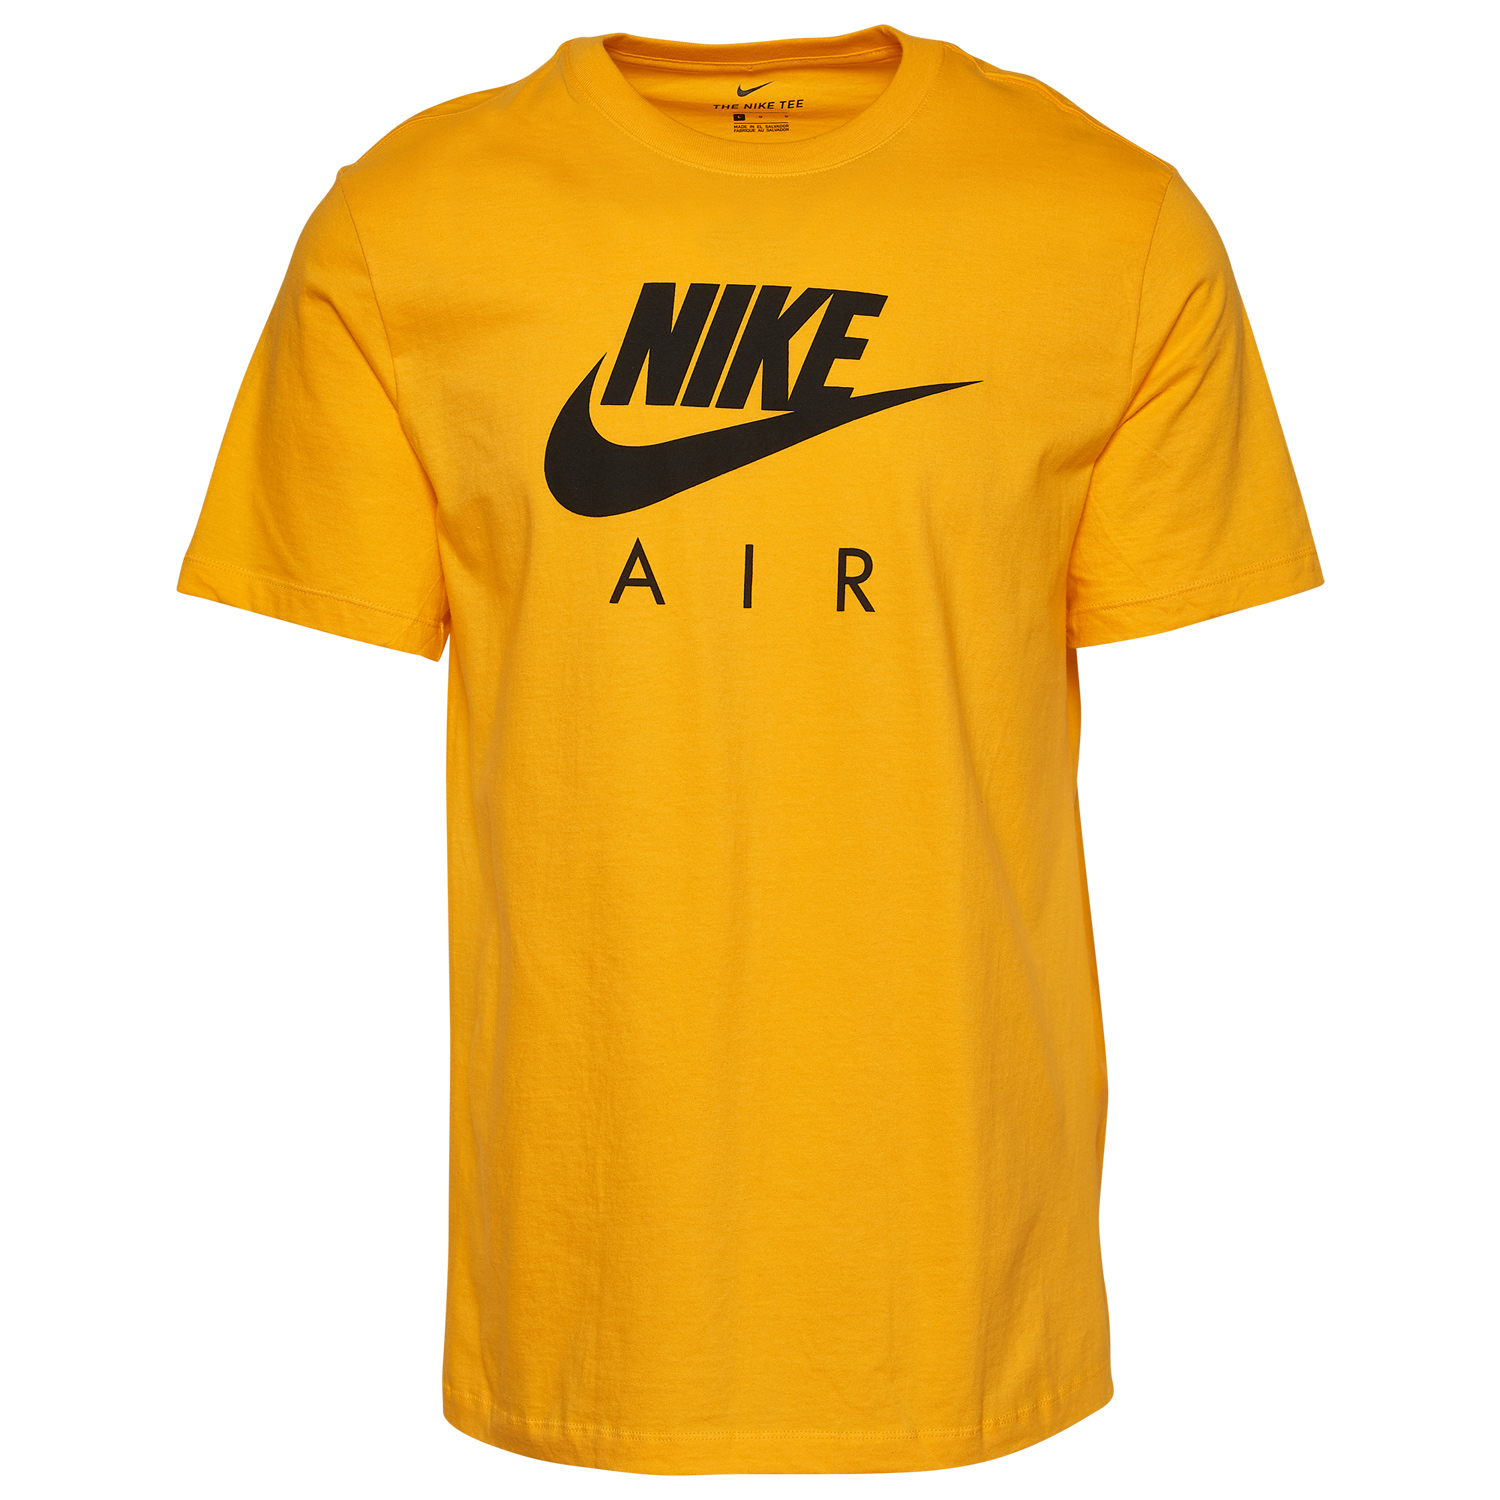 nike-air-university-gold-shirt